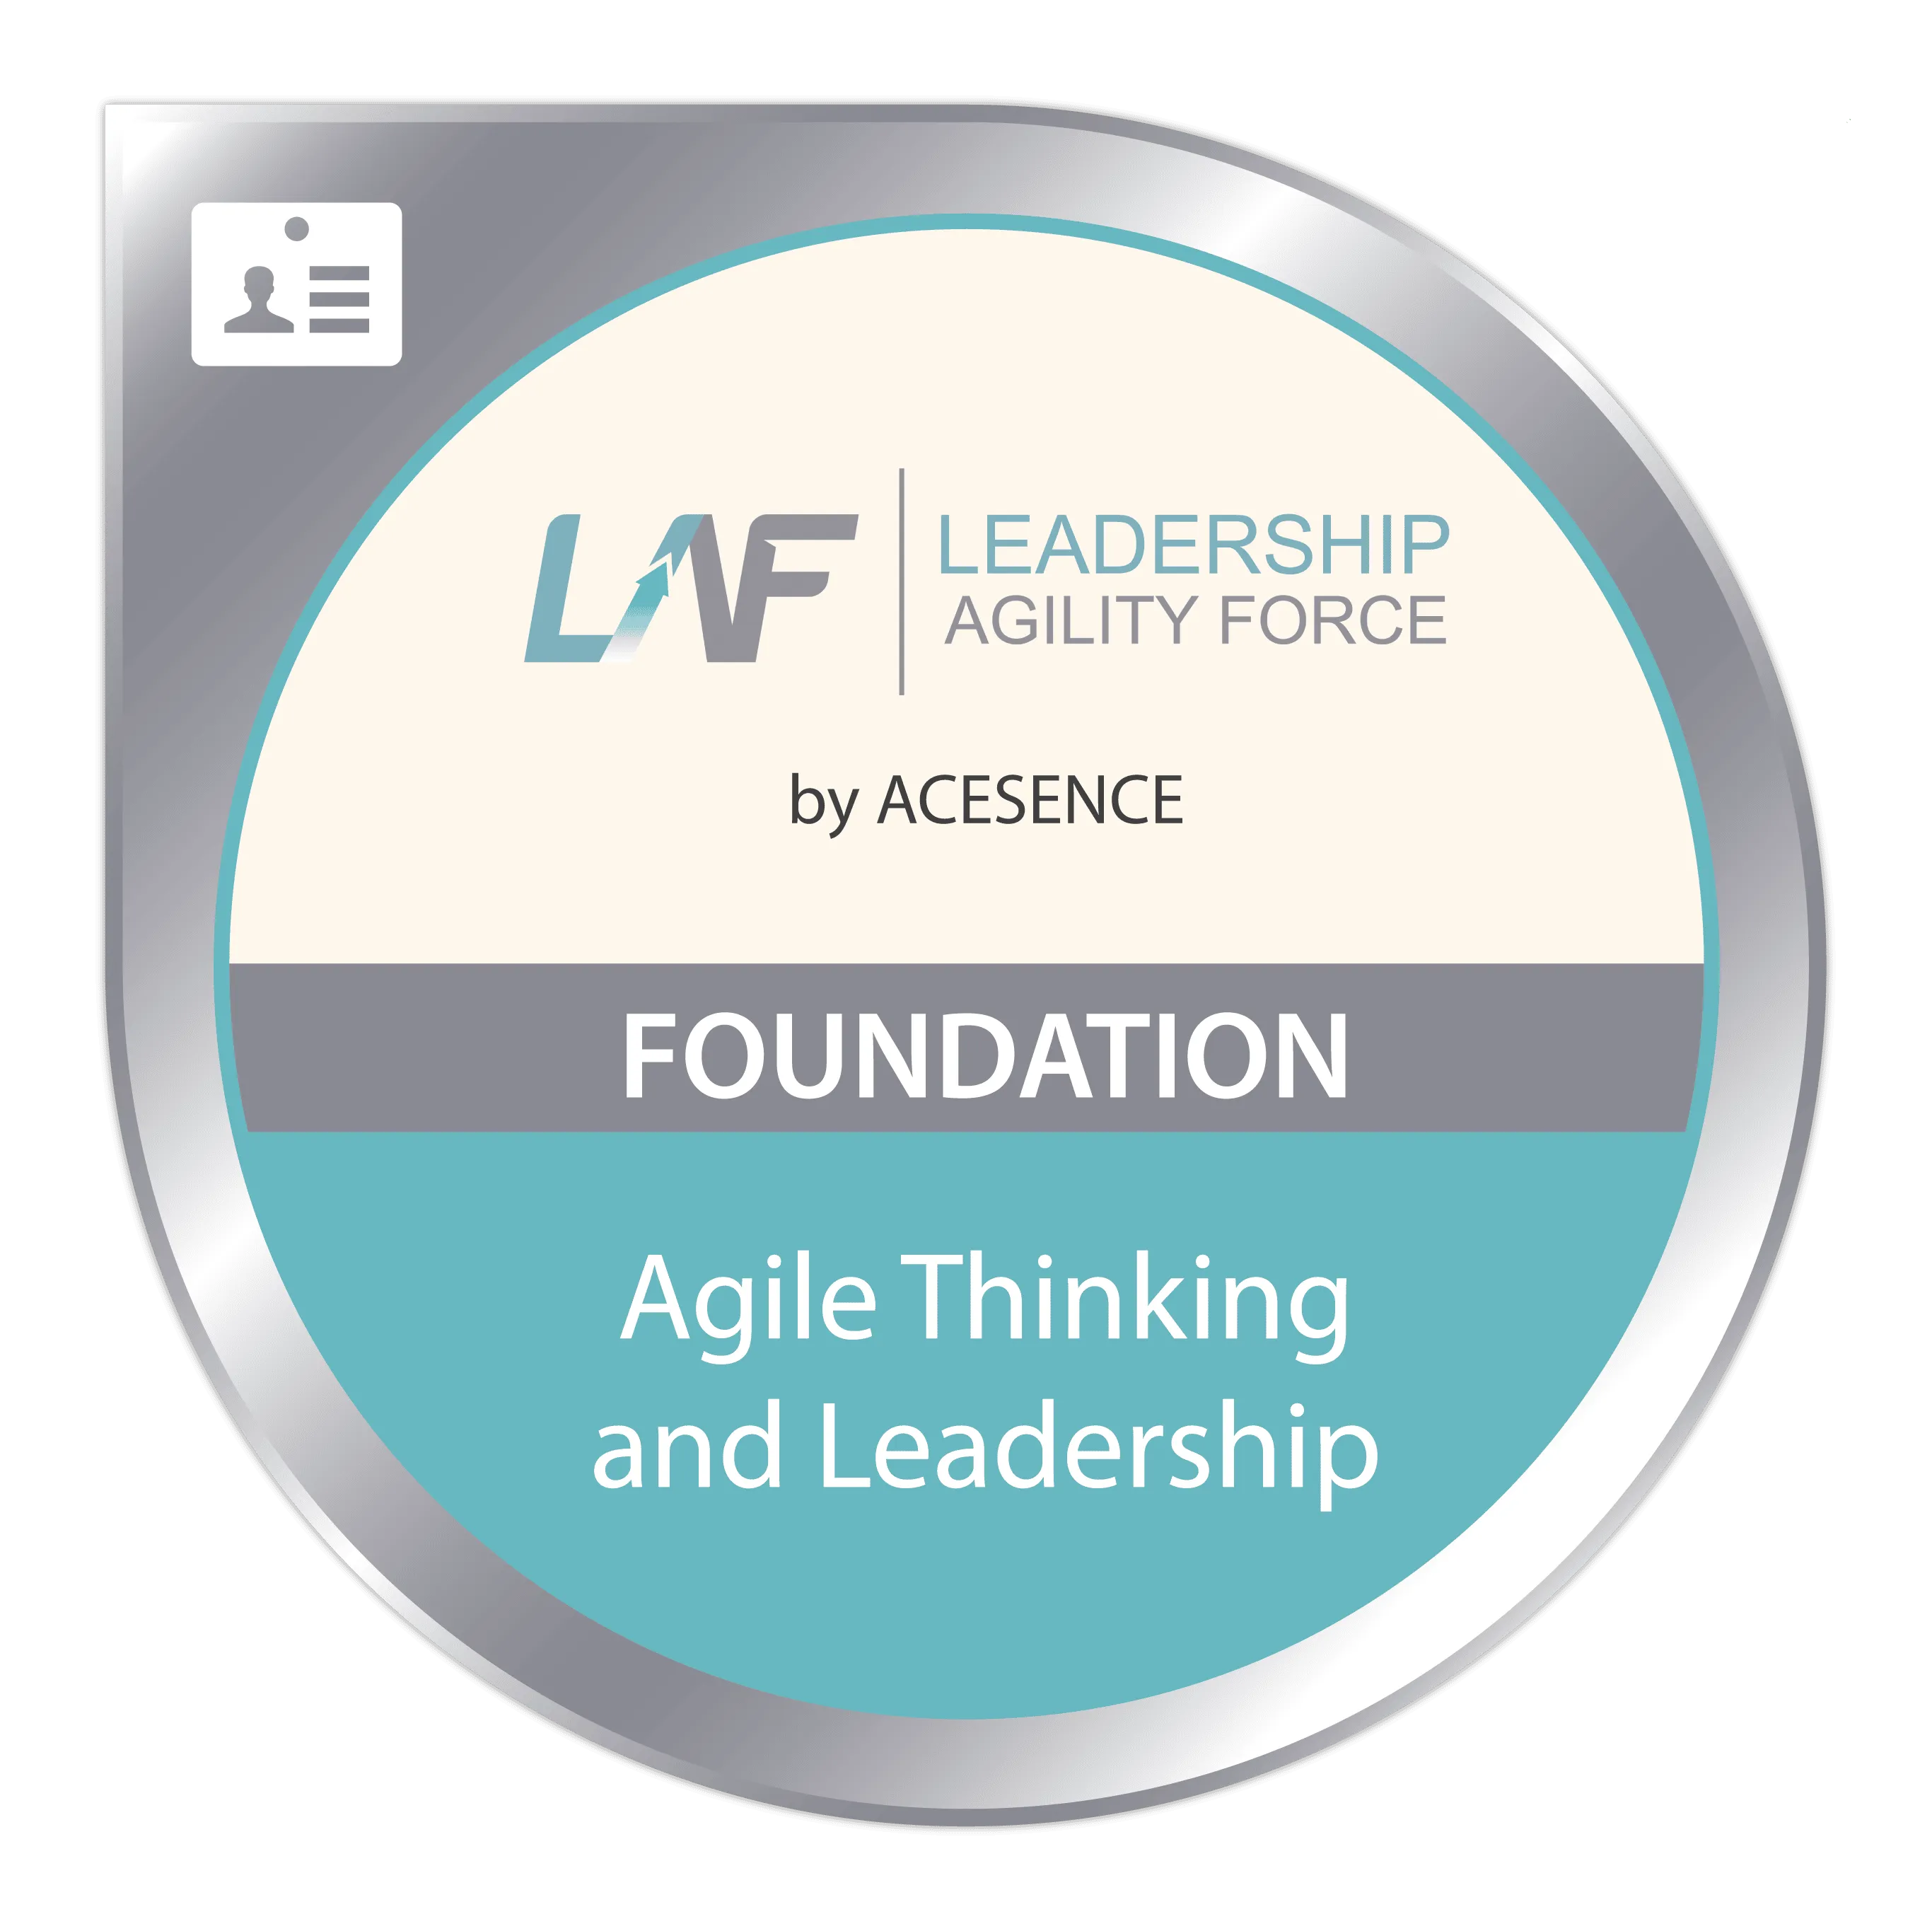 Foundation credential in agile leadership